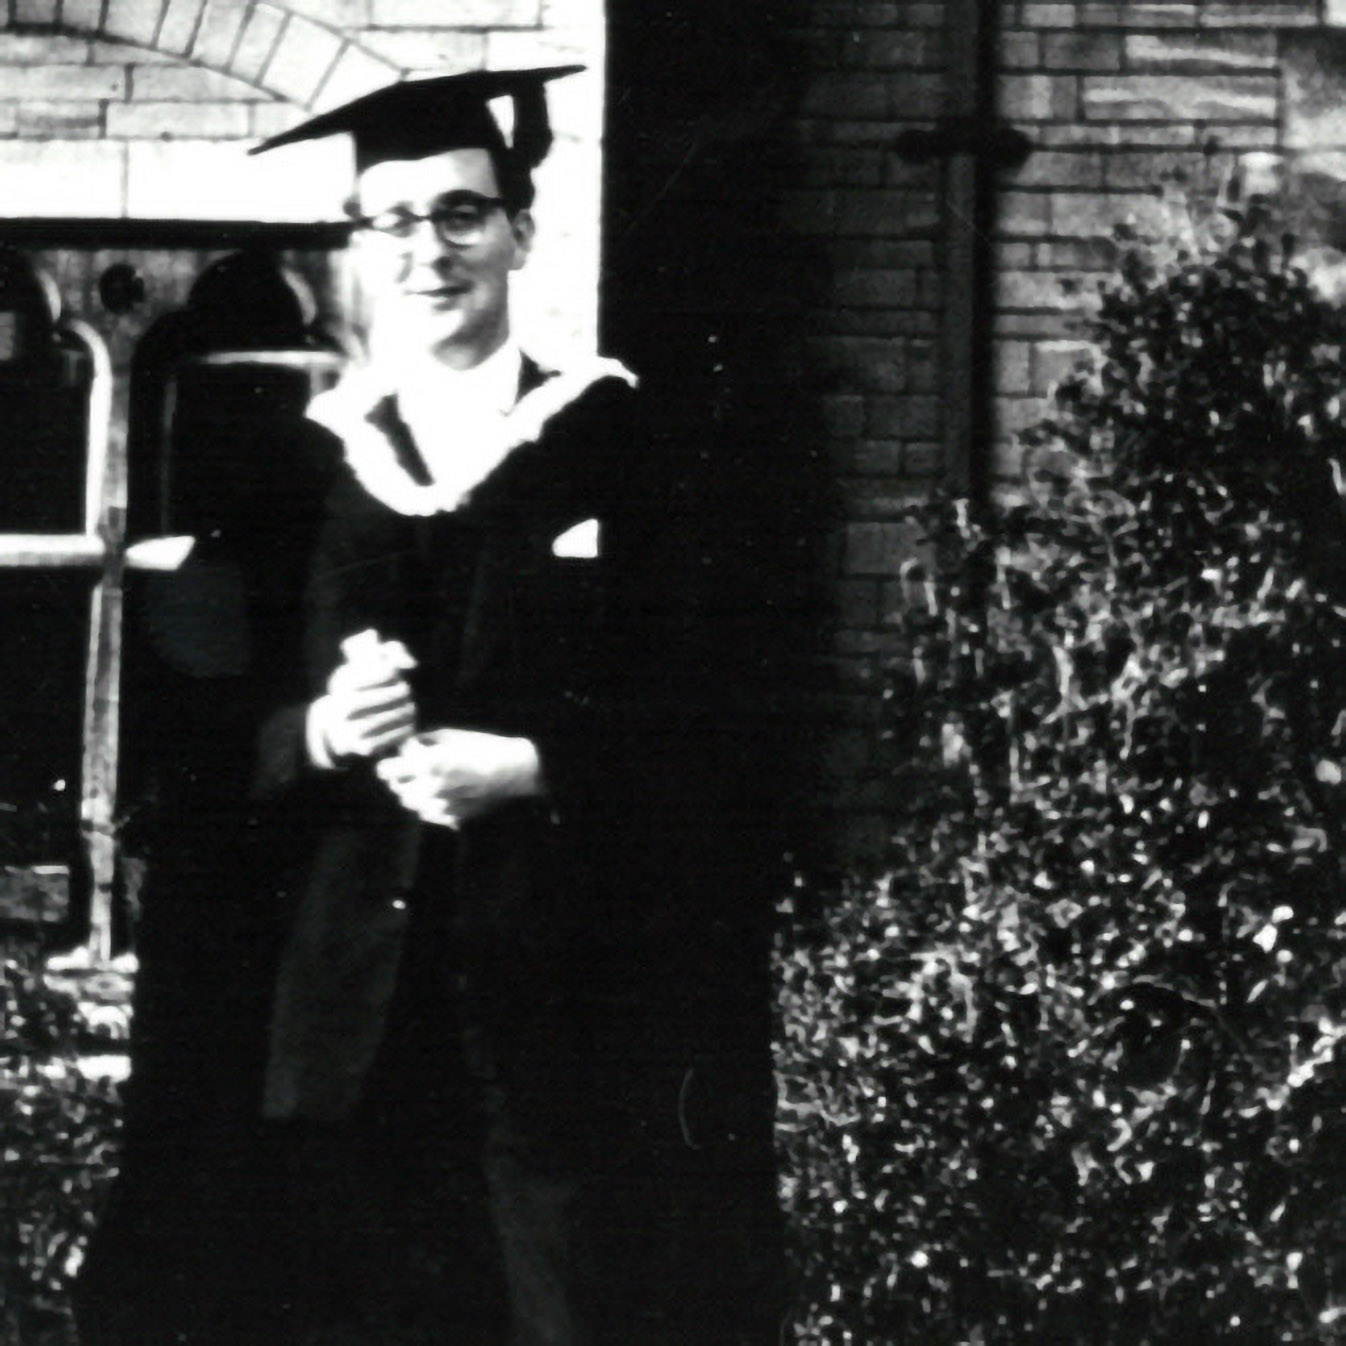 James graduating from Balliol College Oxford, 1955